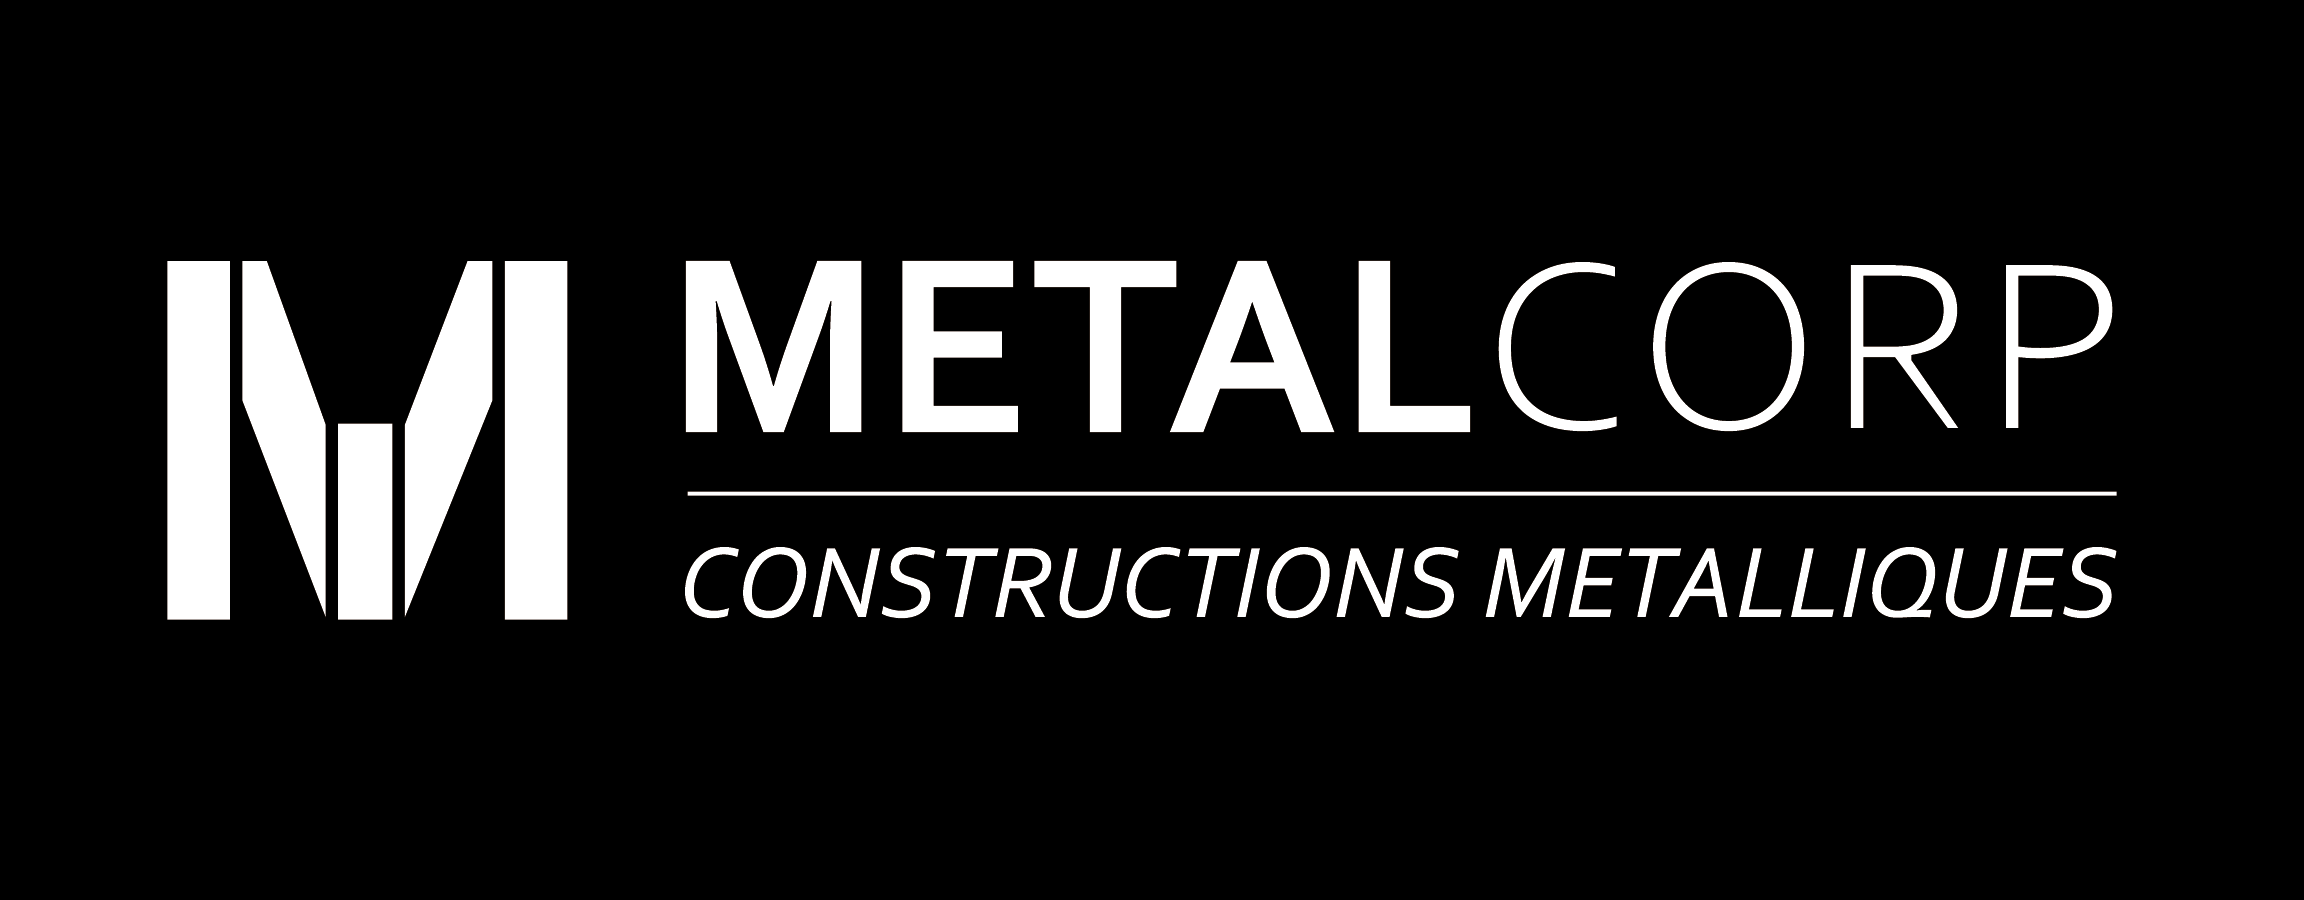 METALCORP Constructions Métalliques